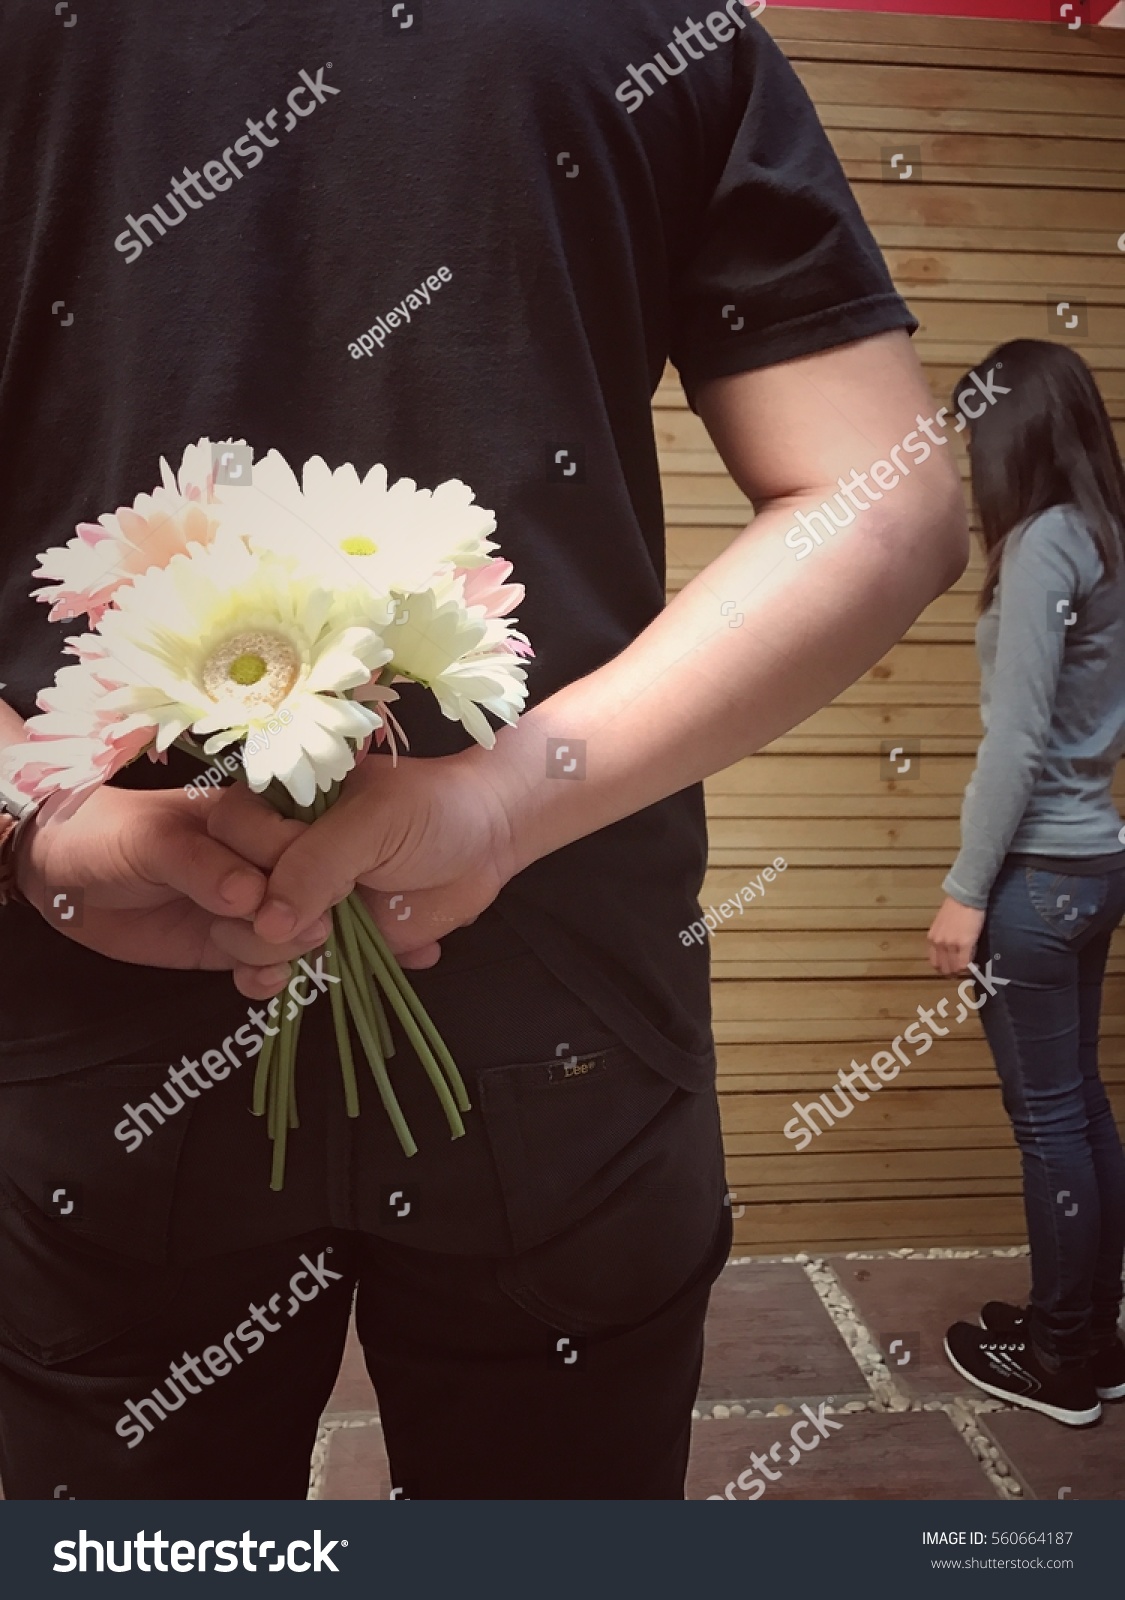 surprise flowers for girlfriend